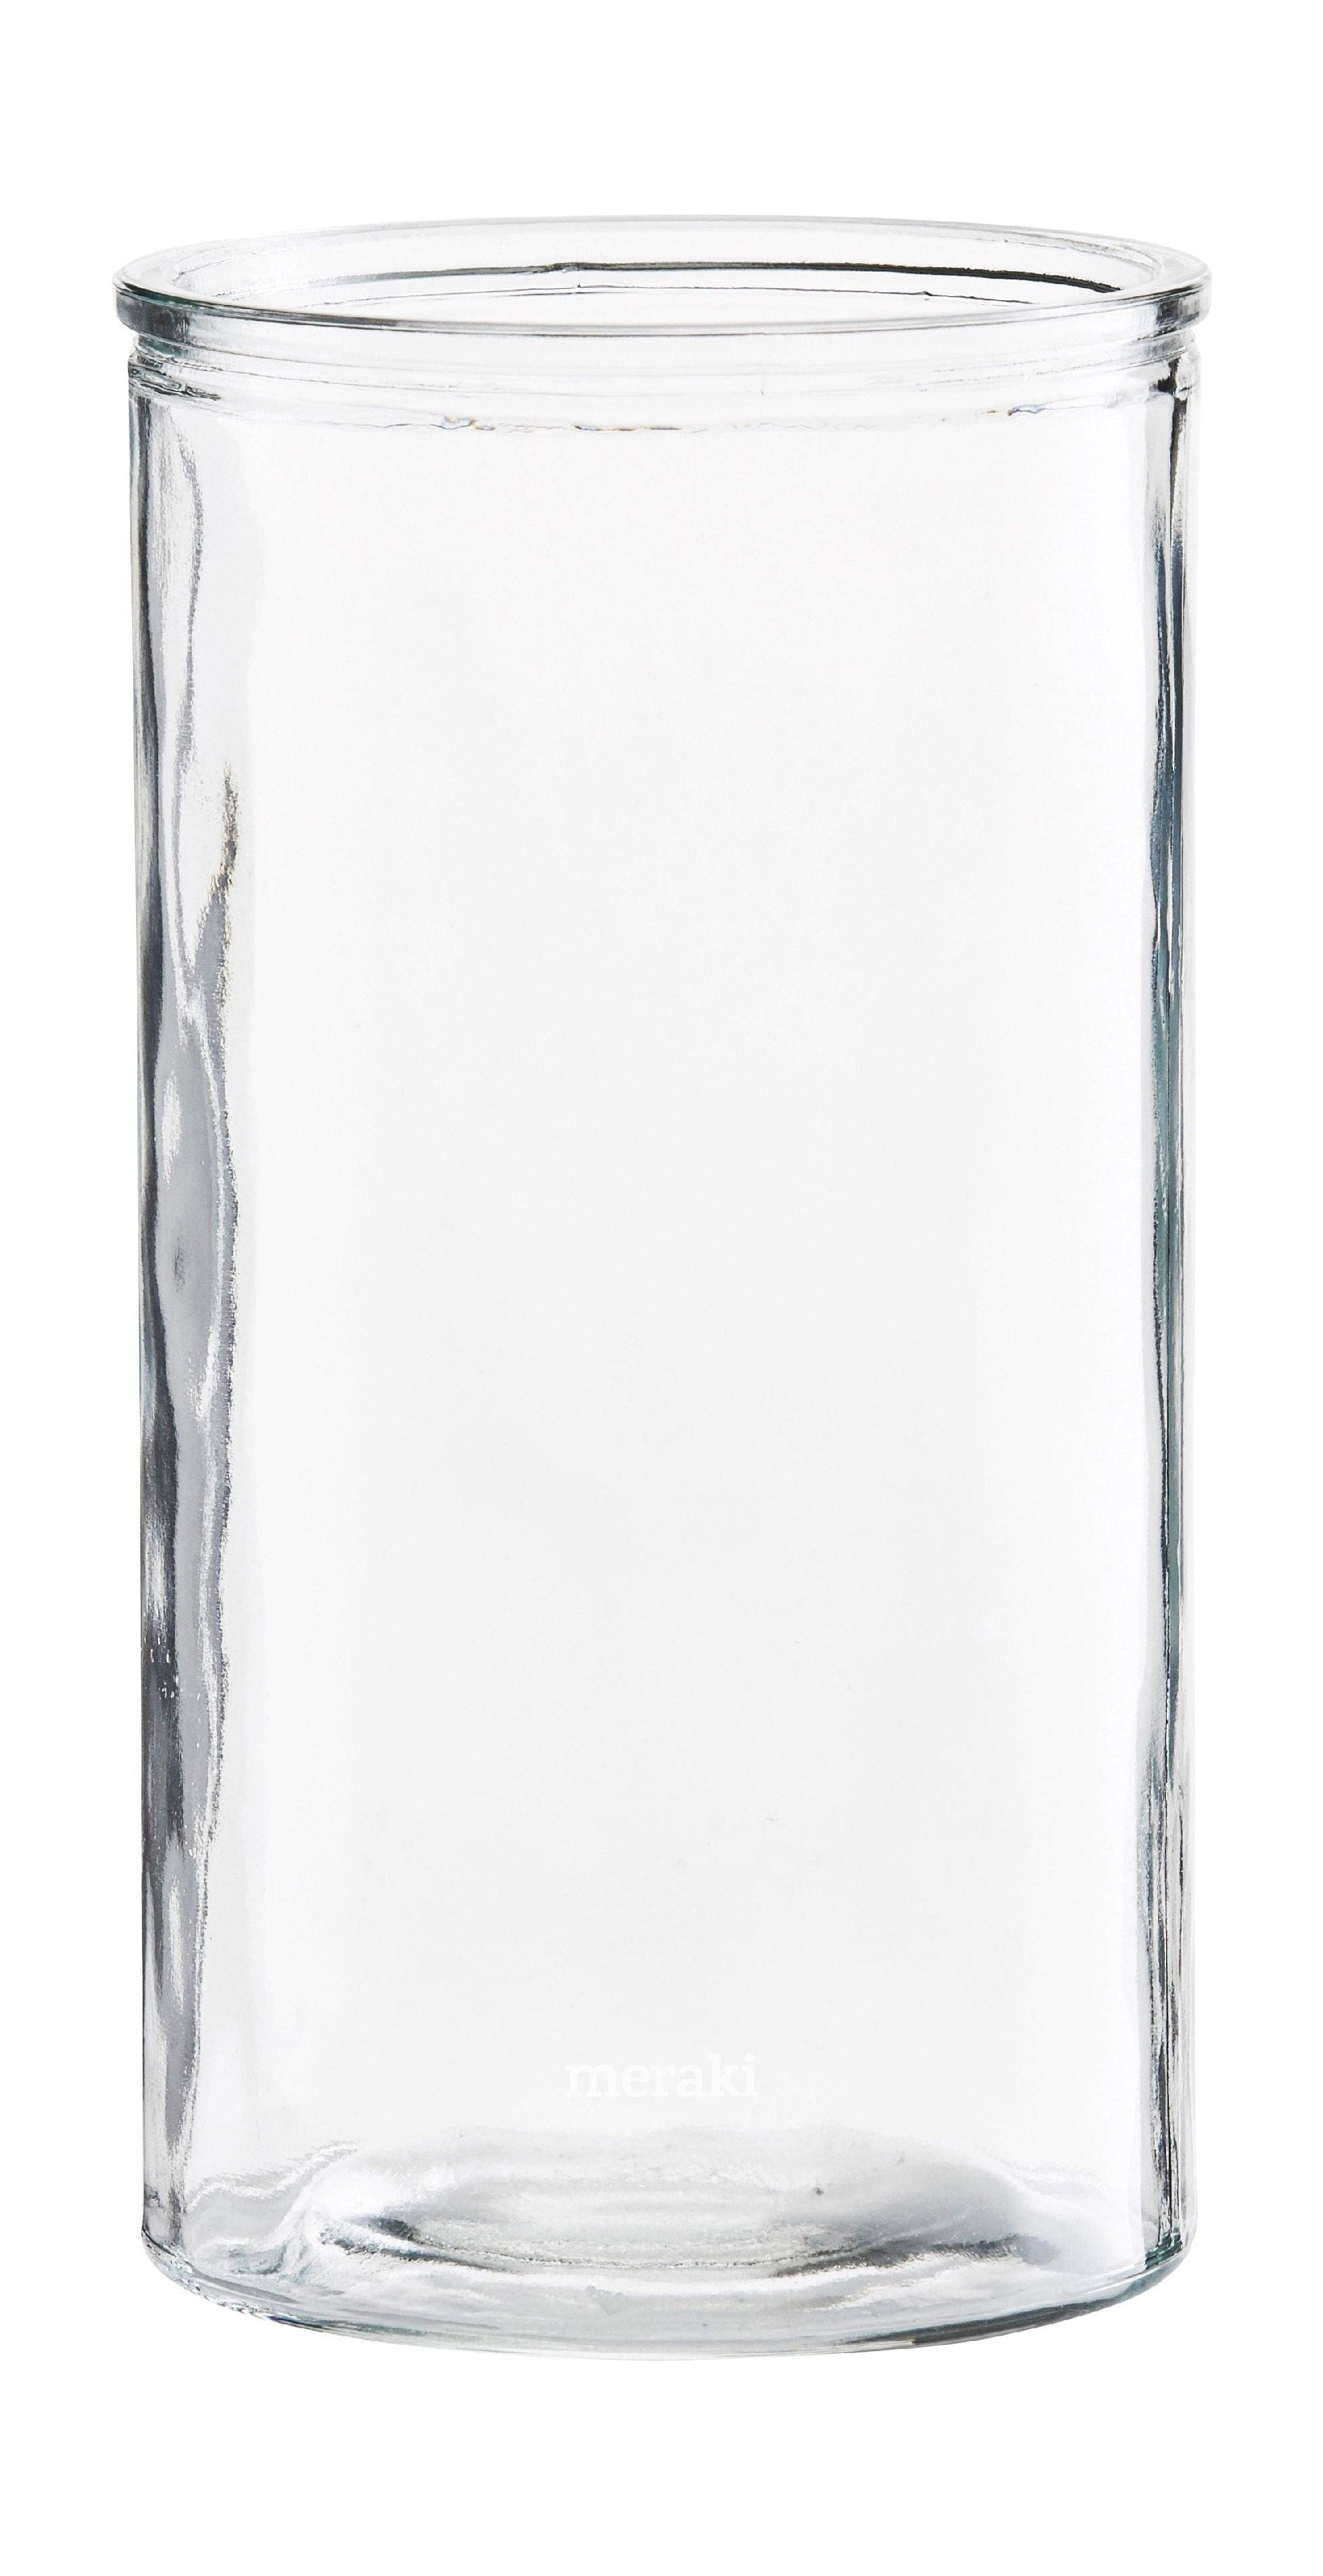 Meraki Cylindervase, Øx H 13x24